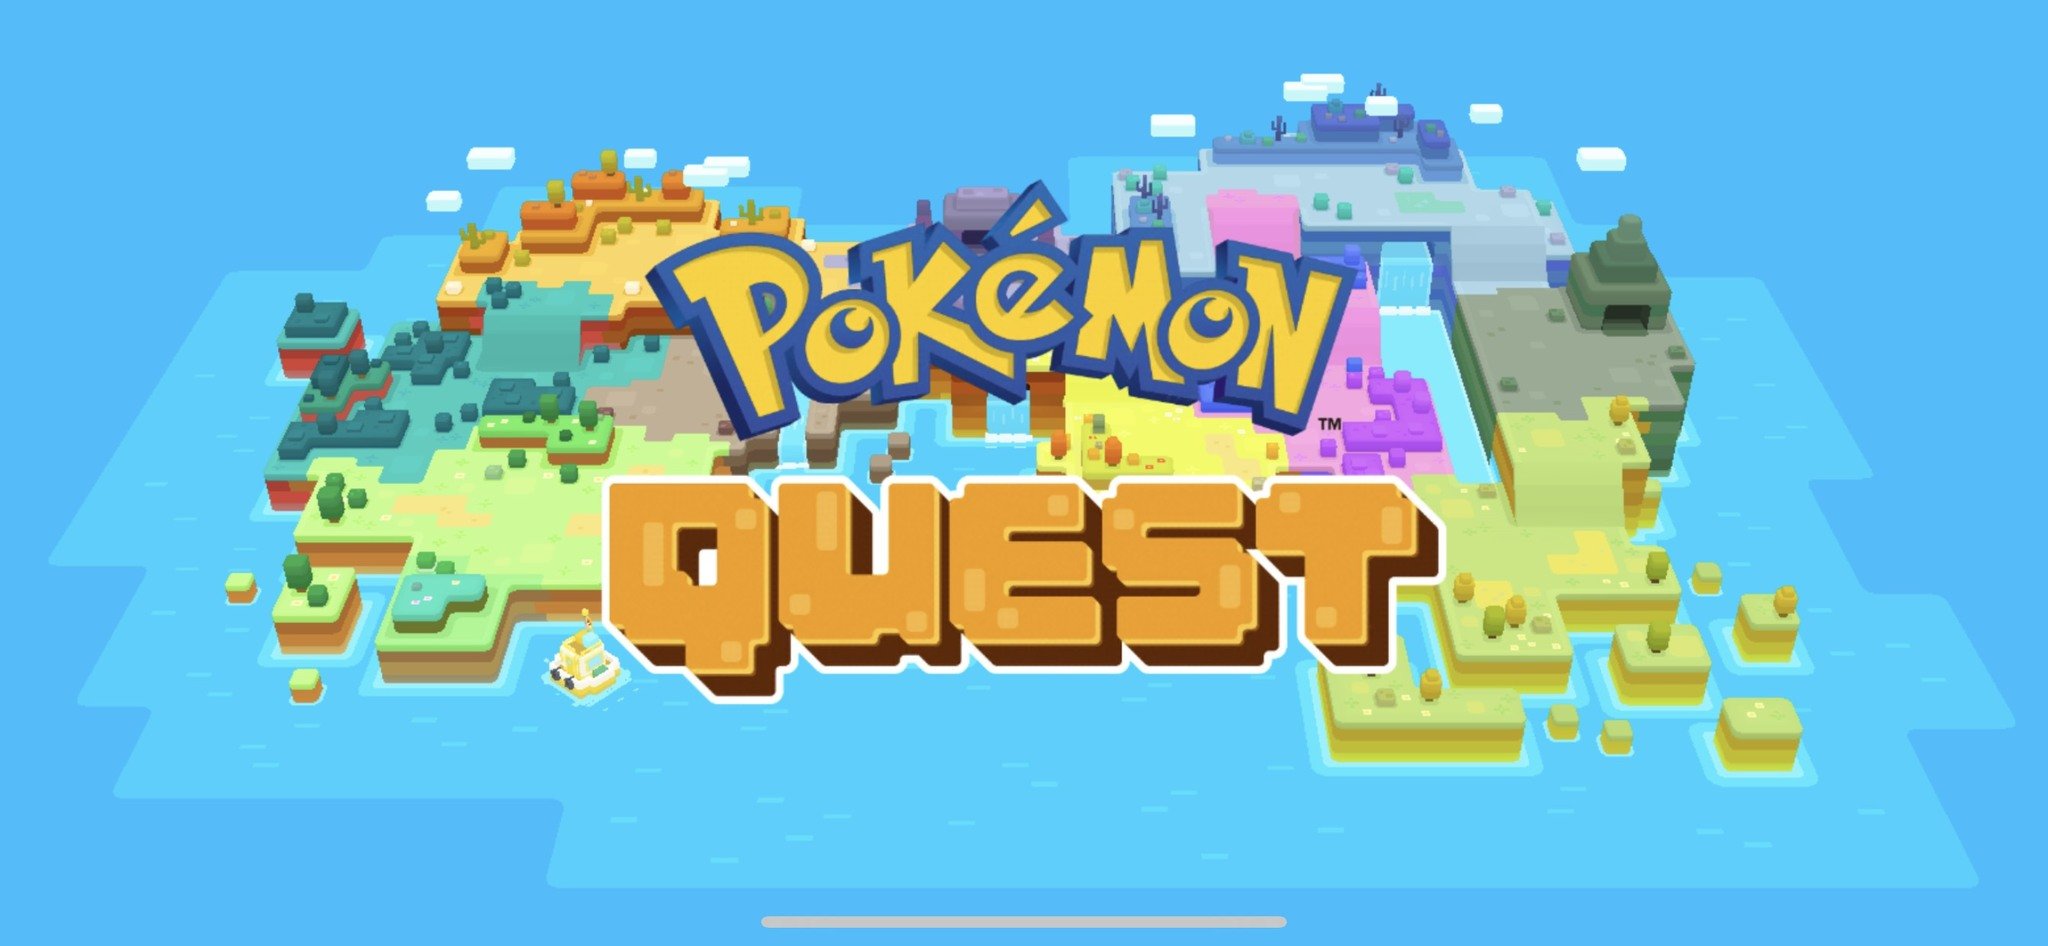 Pokemon Quest Screenshot